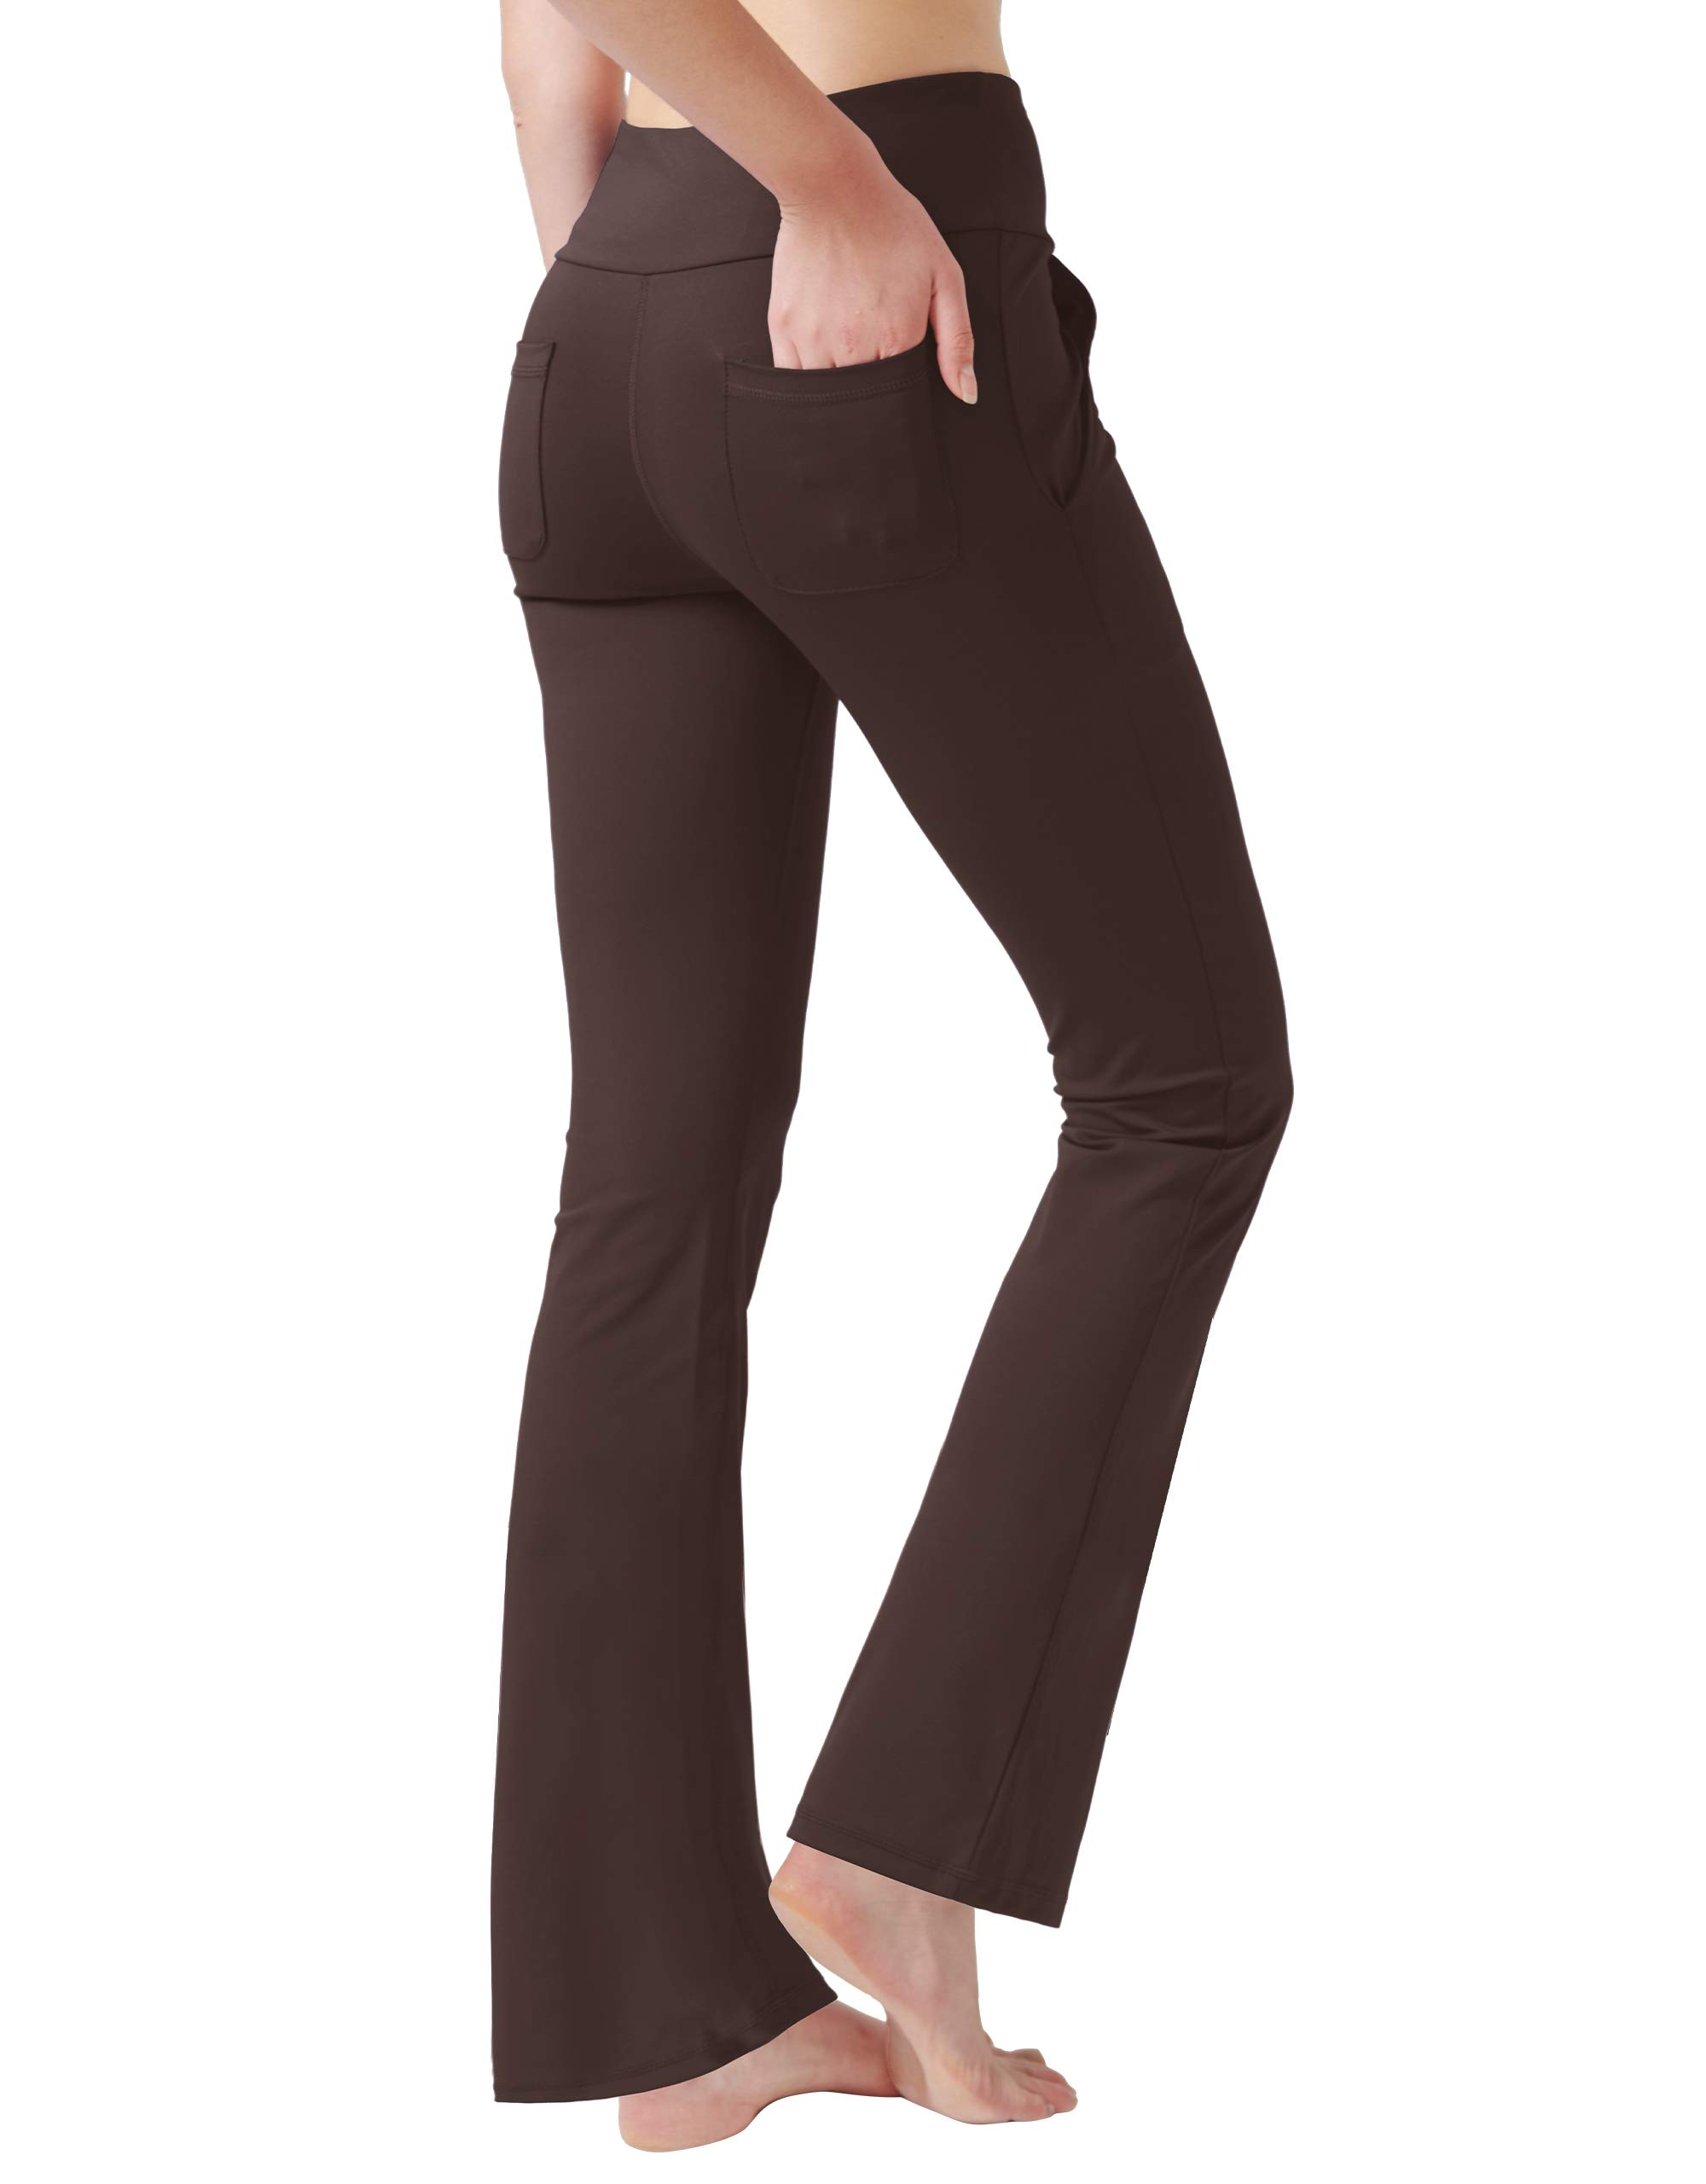 nuveti Nuveti Womens High Waisted Boot Cut Yoga Pants 4 Pockets